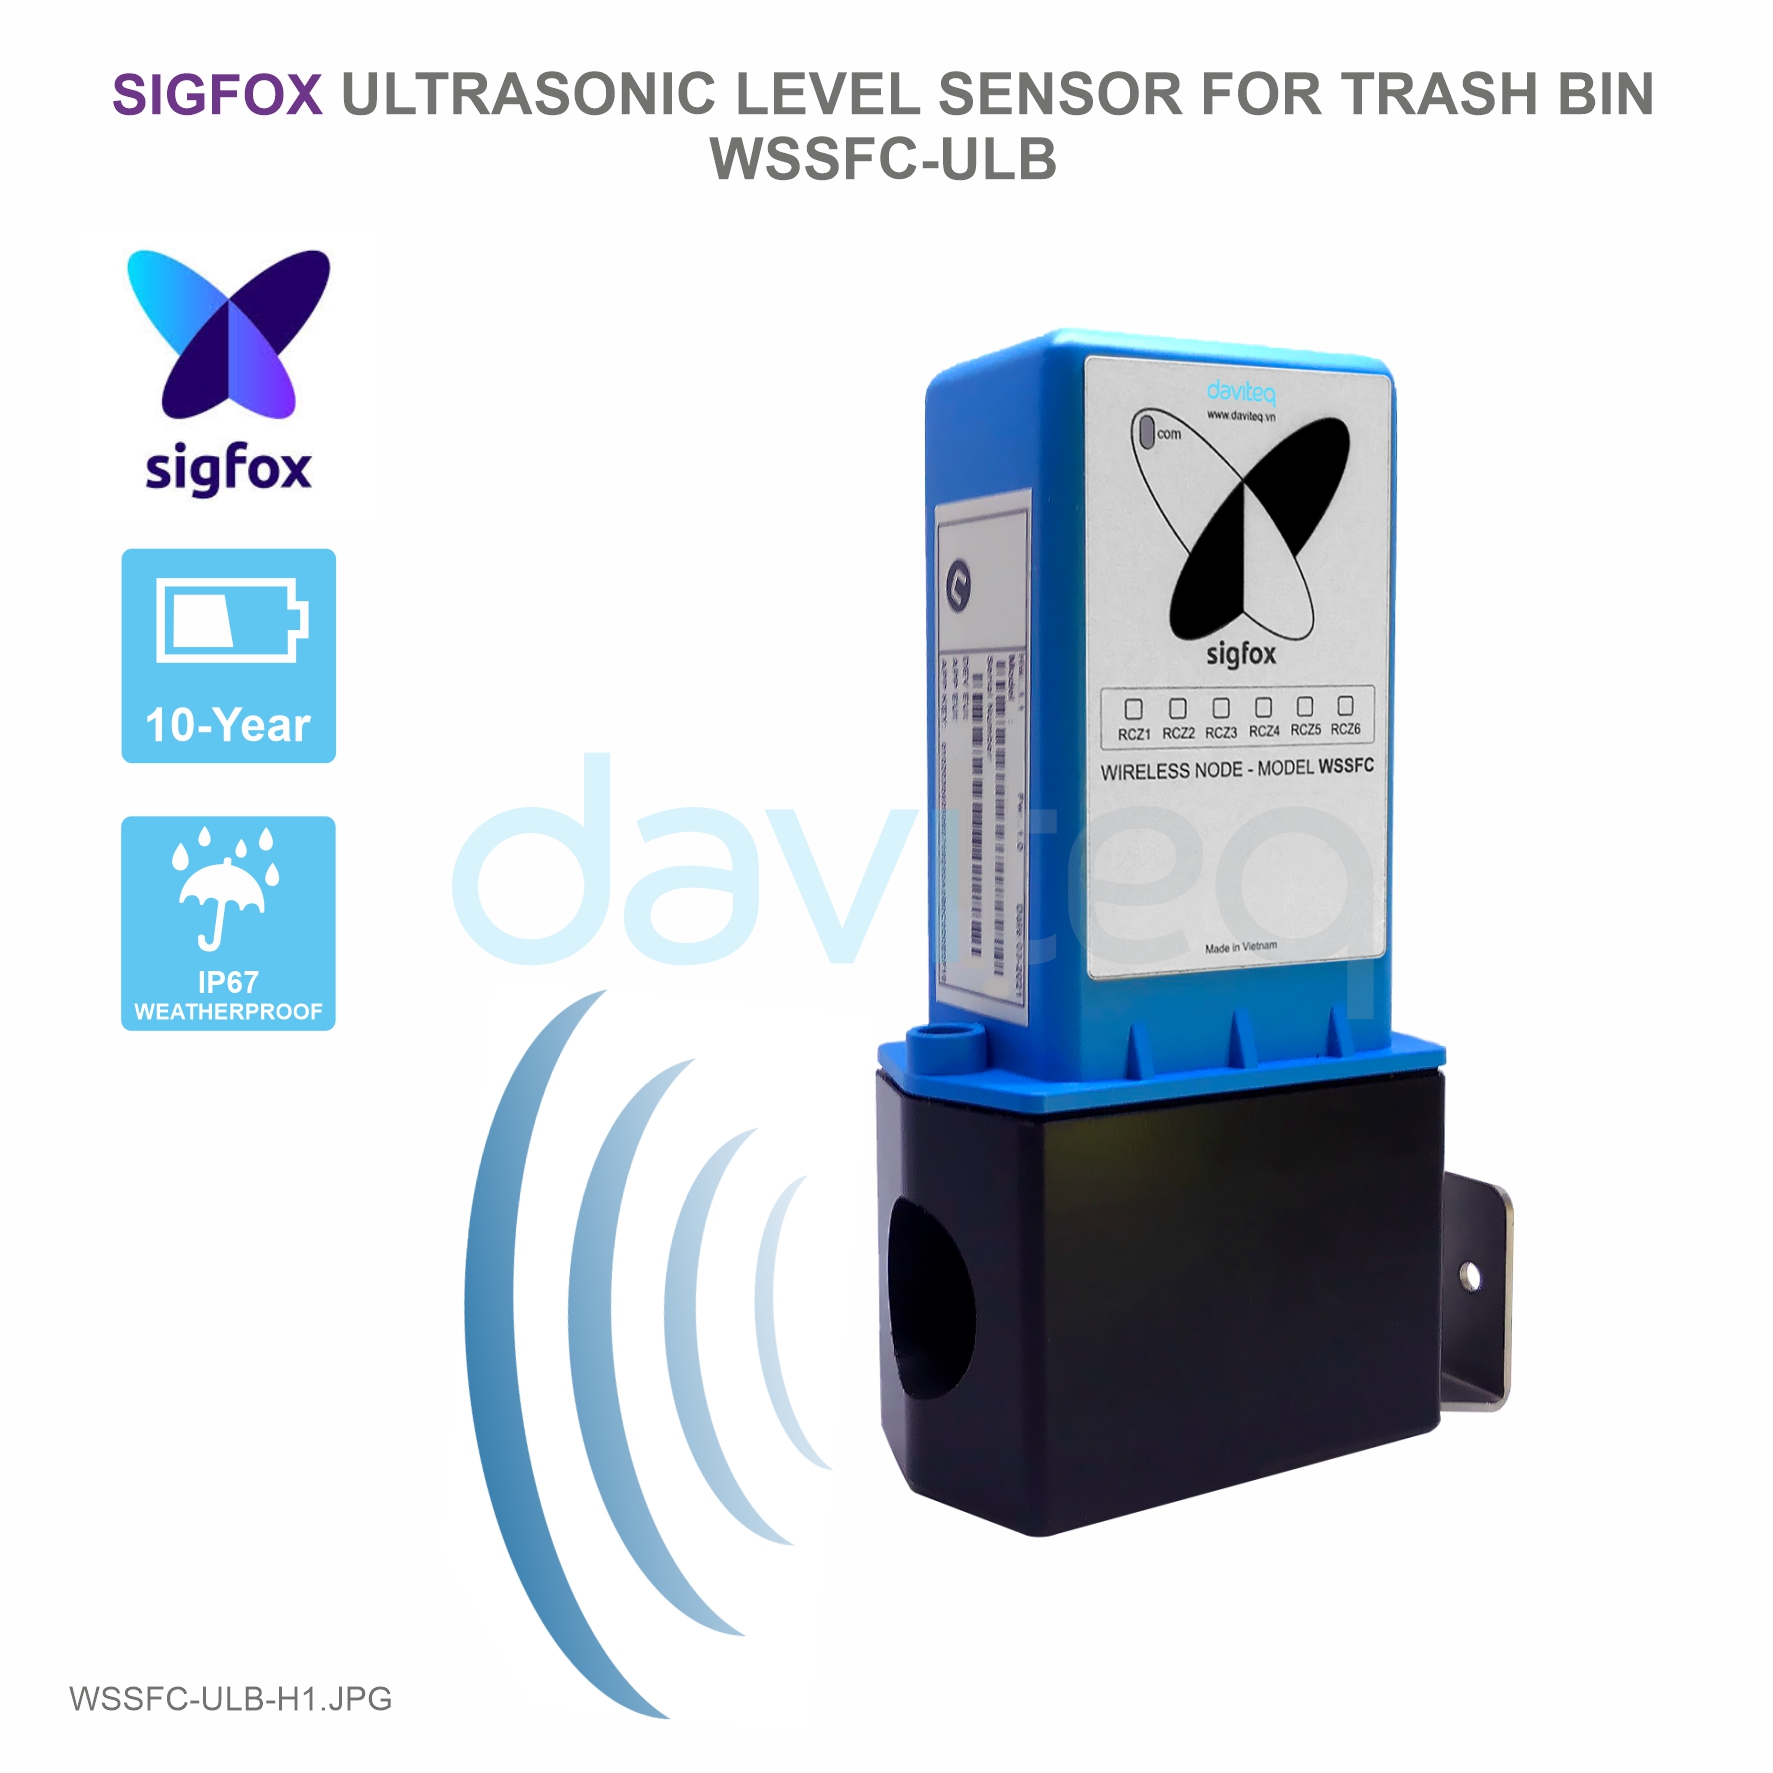 Sigfox Ultrasonic Level Sensor for Trash Bin